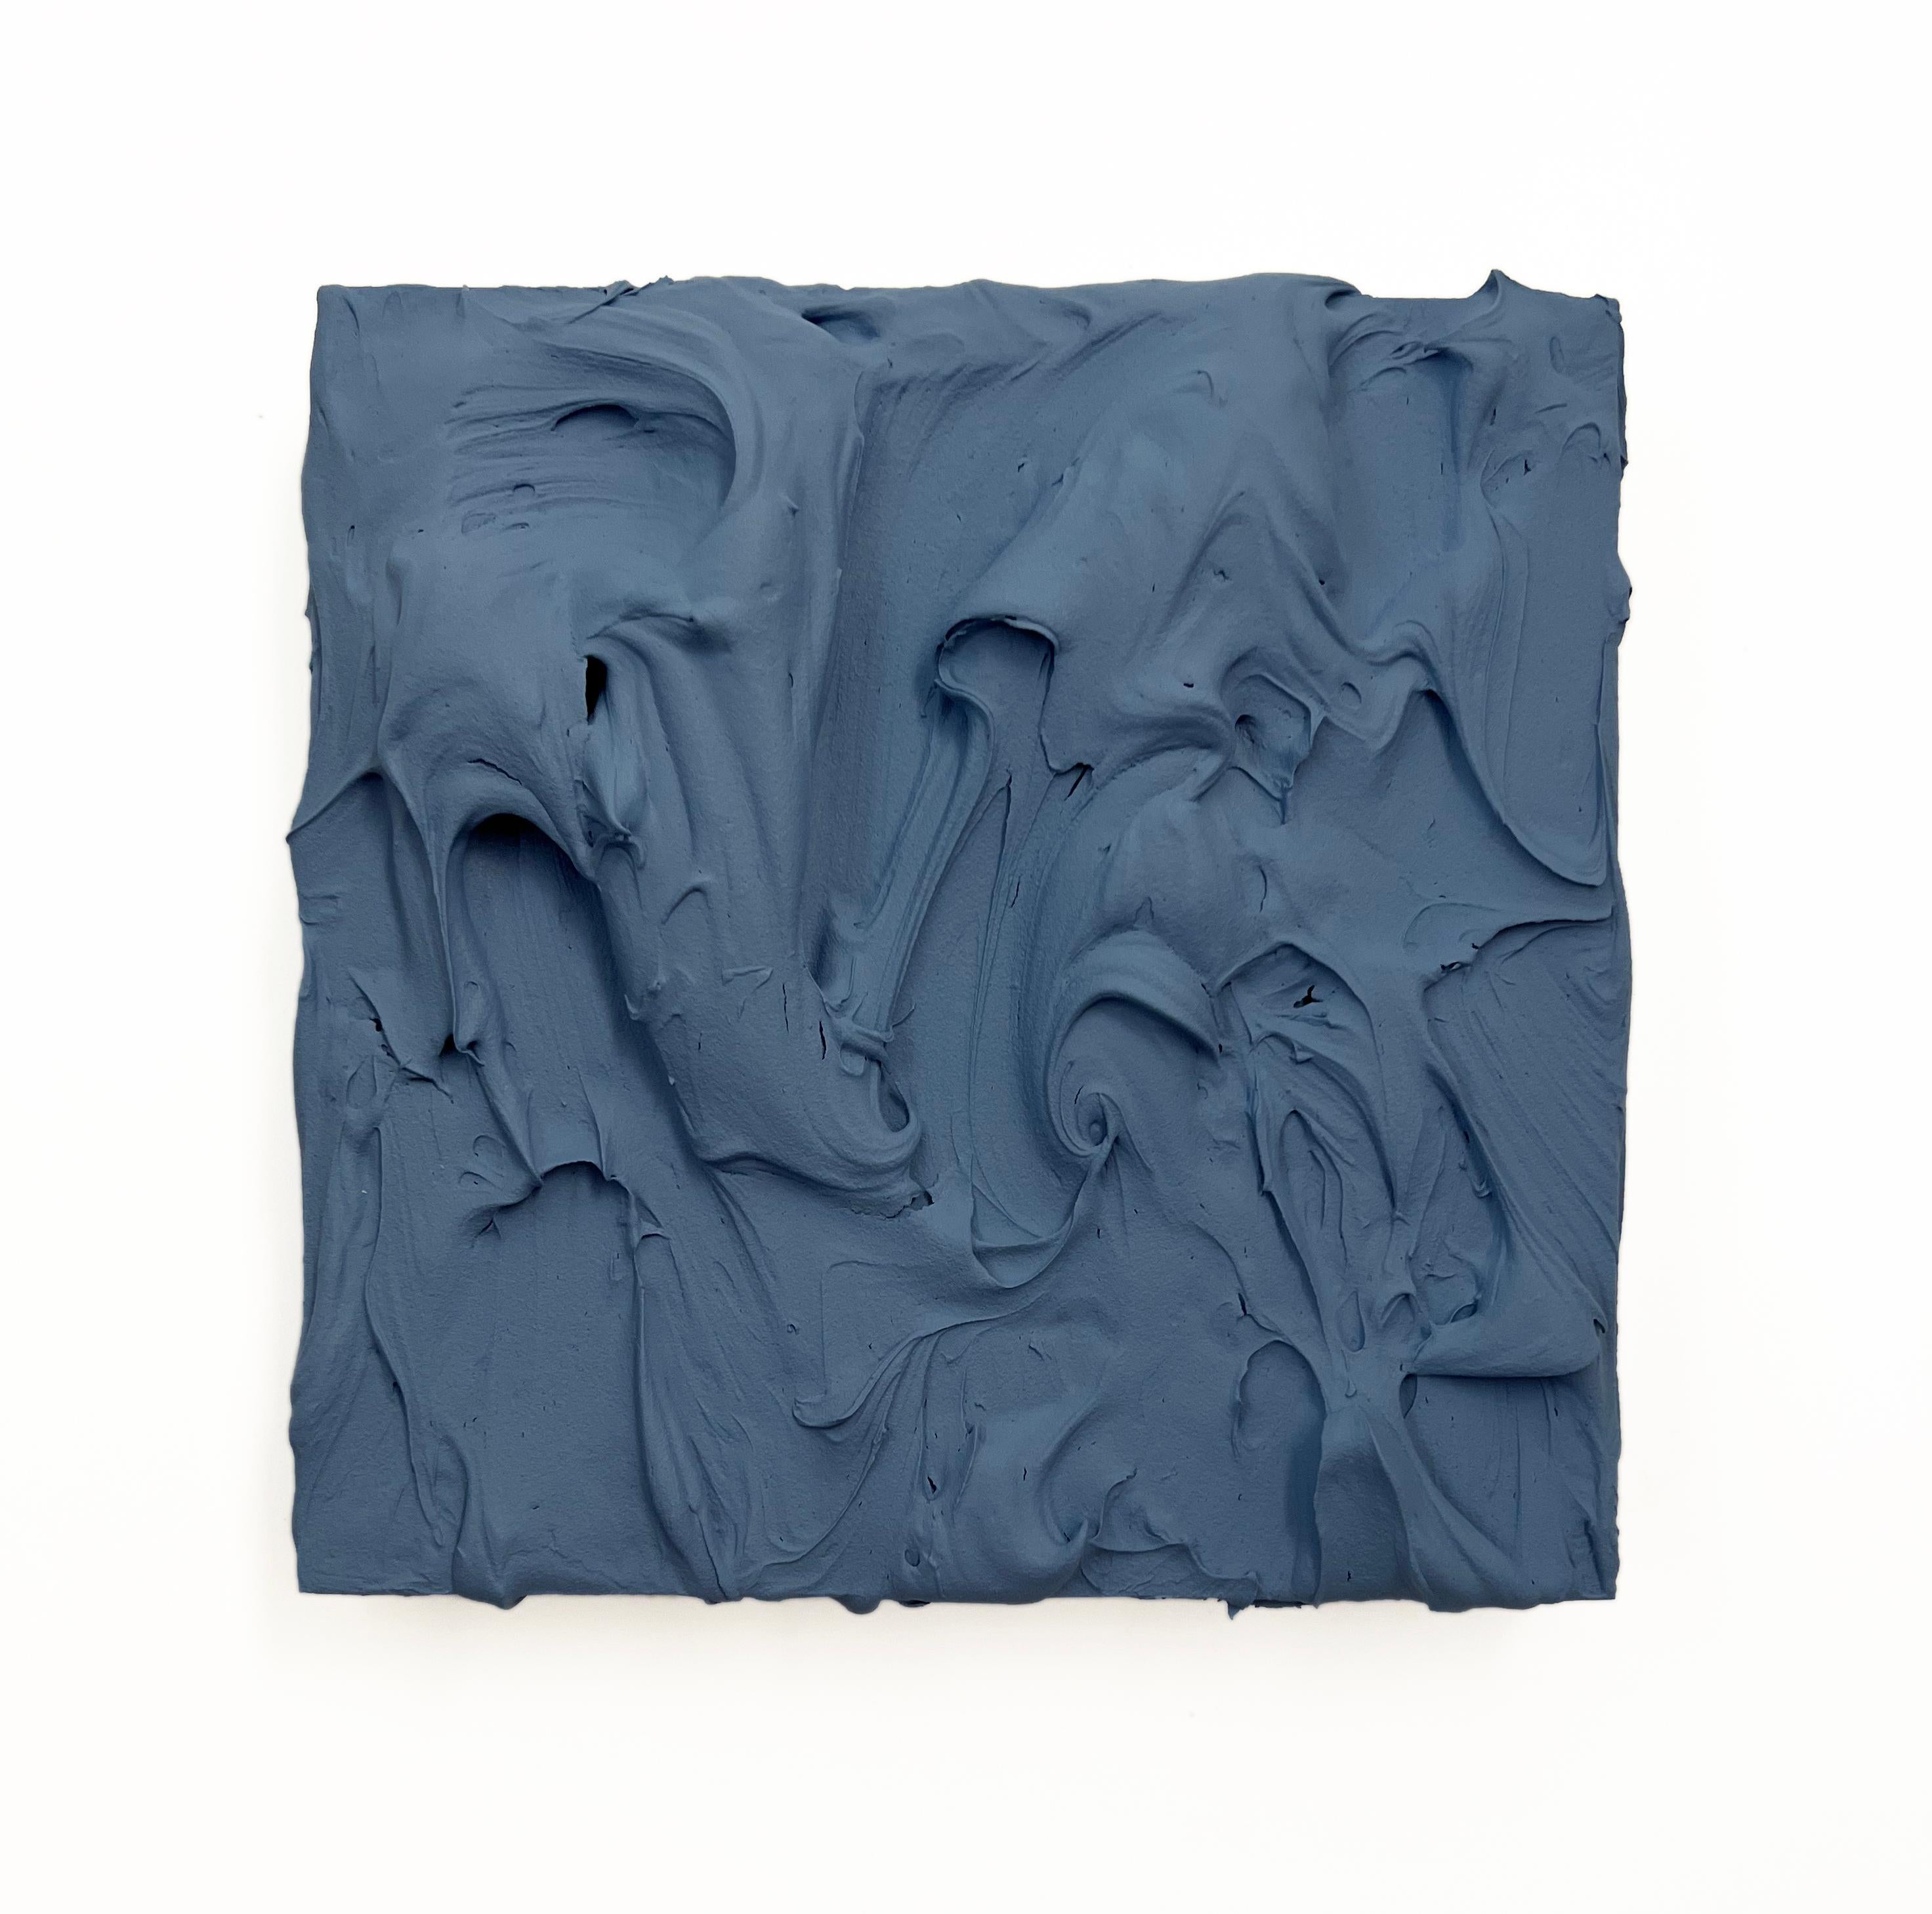 Chloe Hedden Abstract Sculpture - Fog Blue Excess (indigo impasto thick painting monochrome pop art square design)